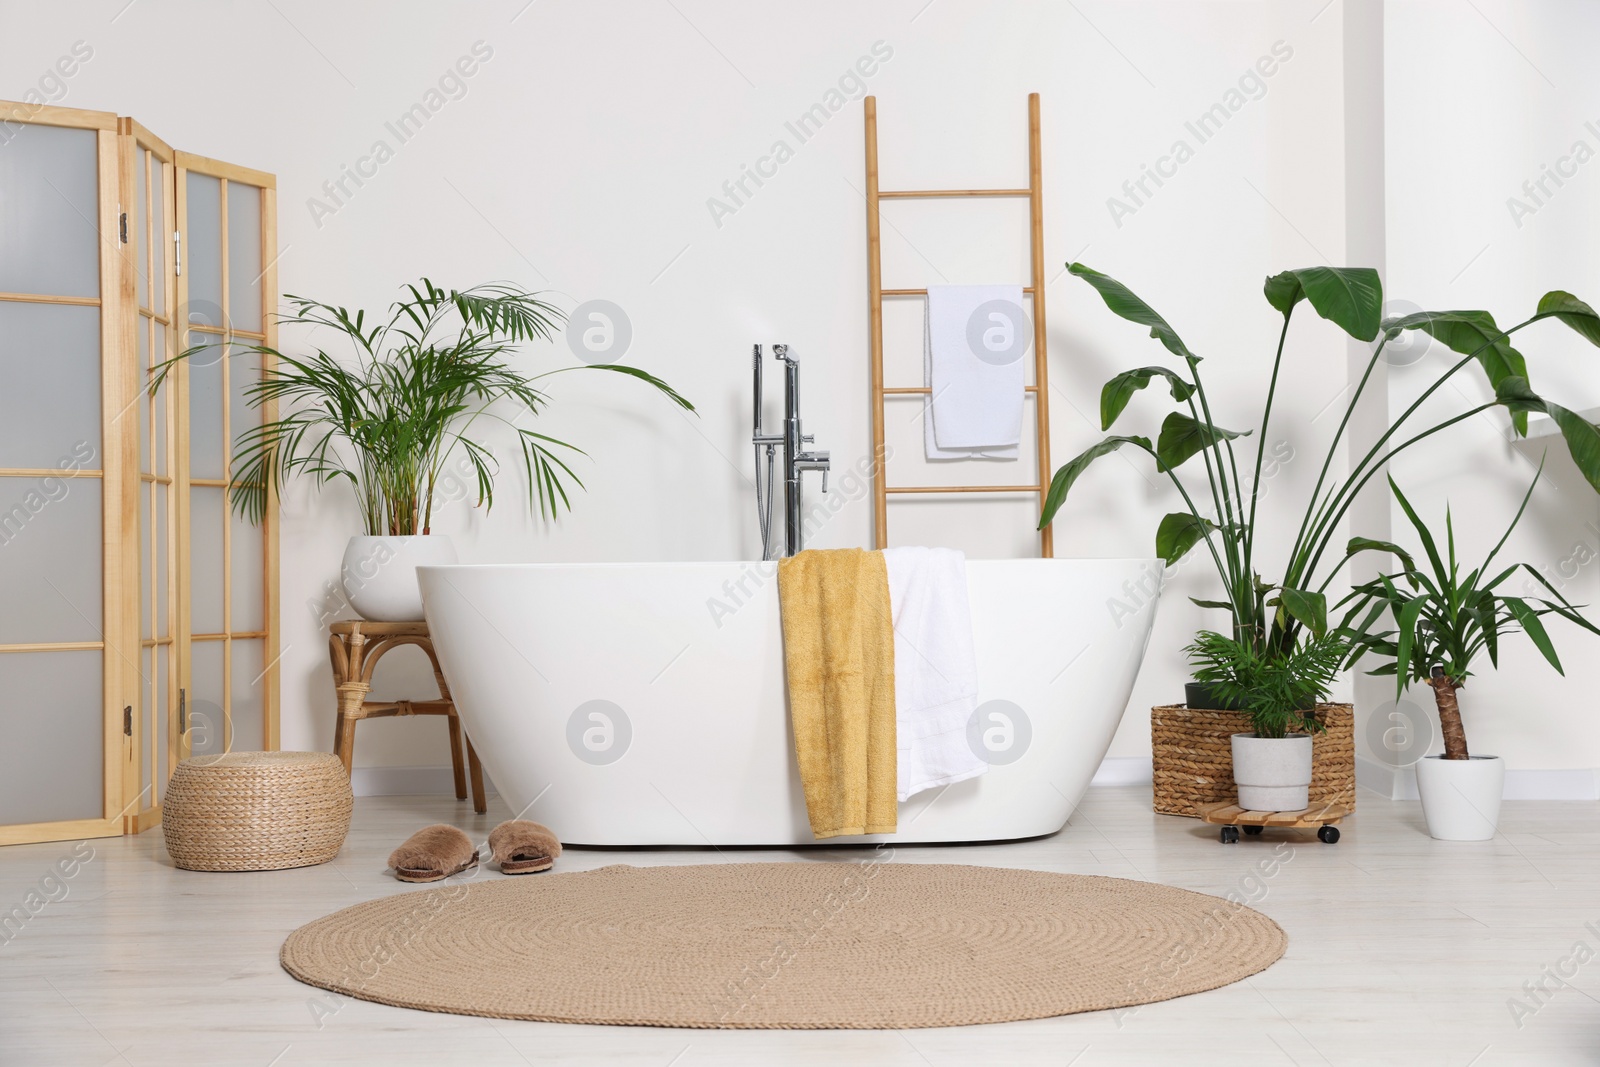 Photo of Stylish bathroom interior with modern ceramic tub and beautiful houseplants